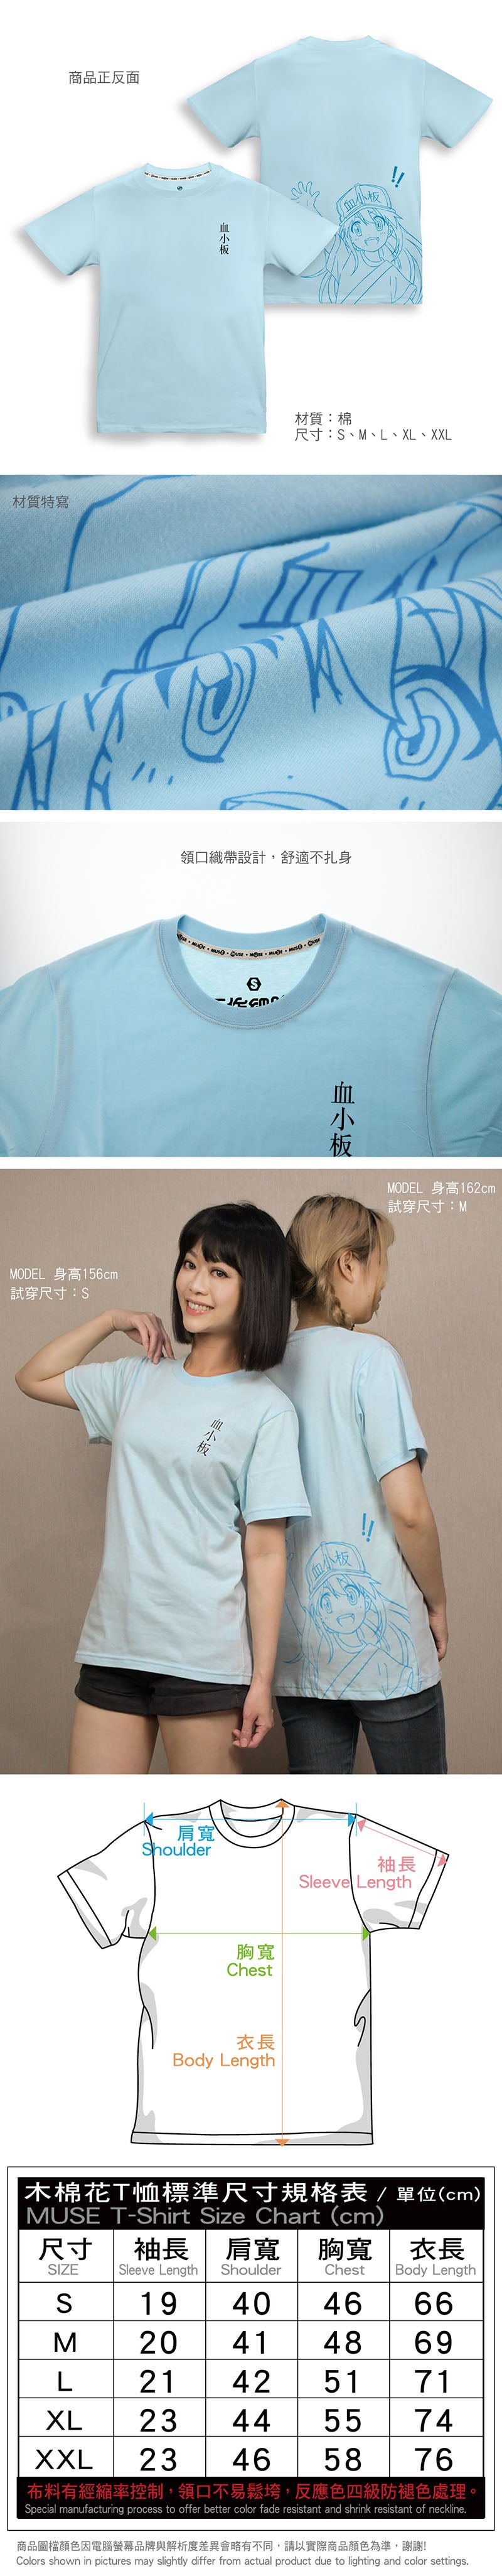 工作細胞 潮流T-shirt 血小板(2) 生活家品 Microworks Online Store